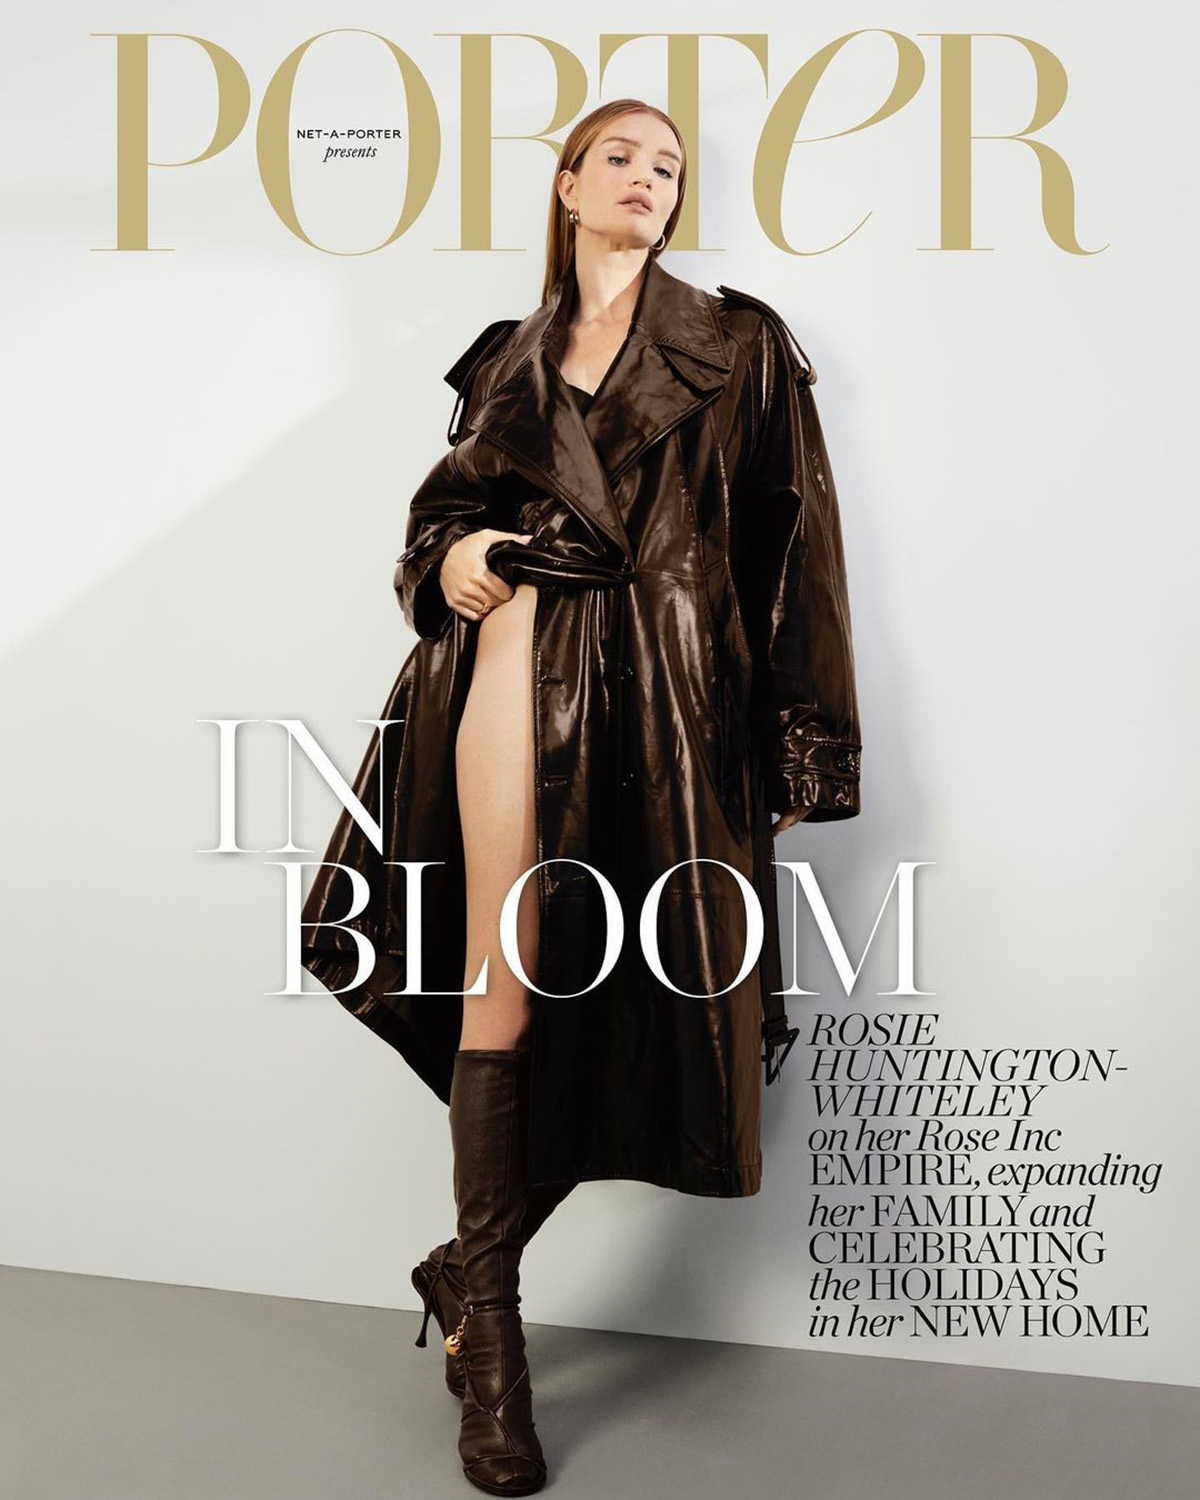 Rosie Huntington-Whiteley covers Porter Magazine November 15th, 2021 by Nicole Maria Winkler